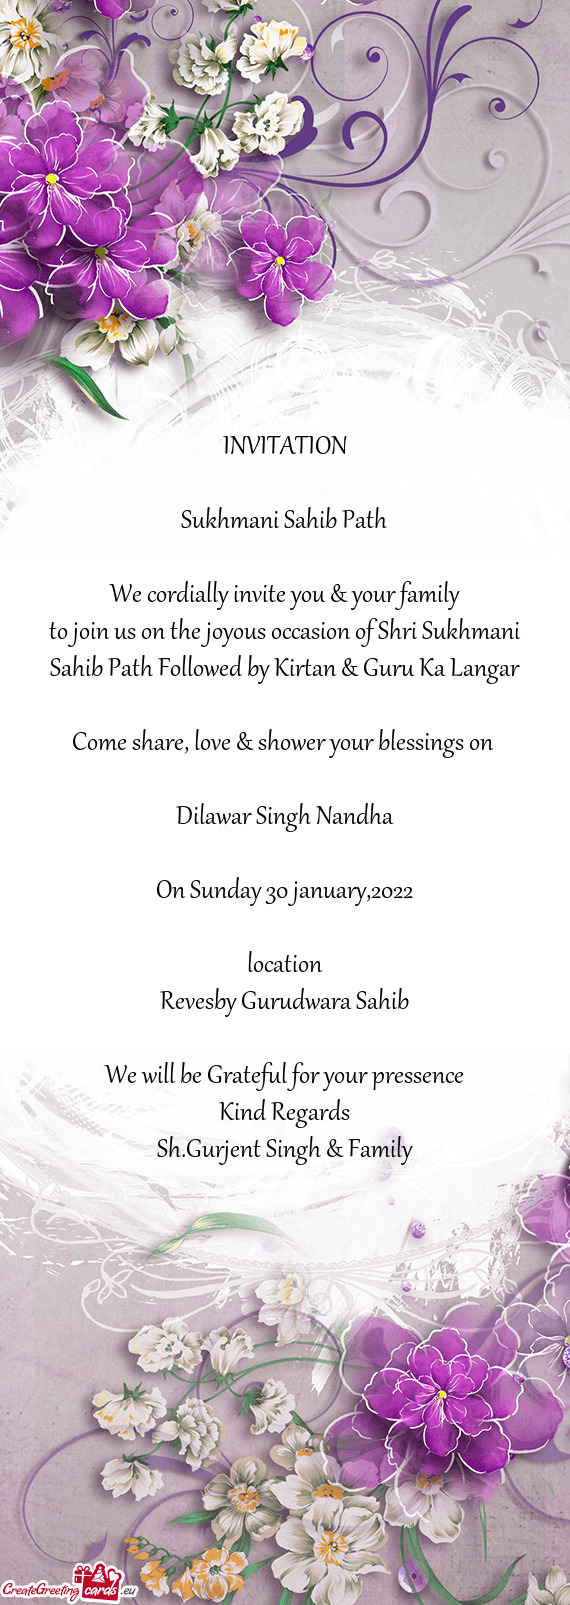 To join us on the joyous occasion of Shri Sukhmani Sahib Path Followed by Kirtan & Guru Ka Langar